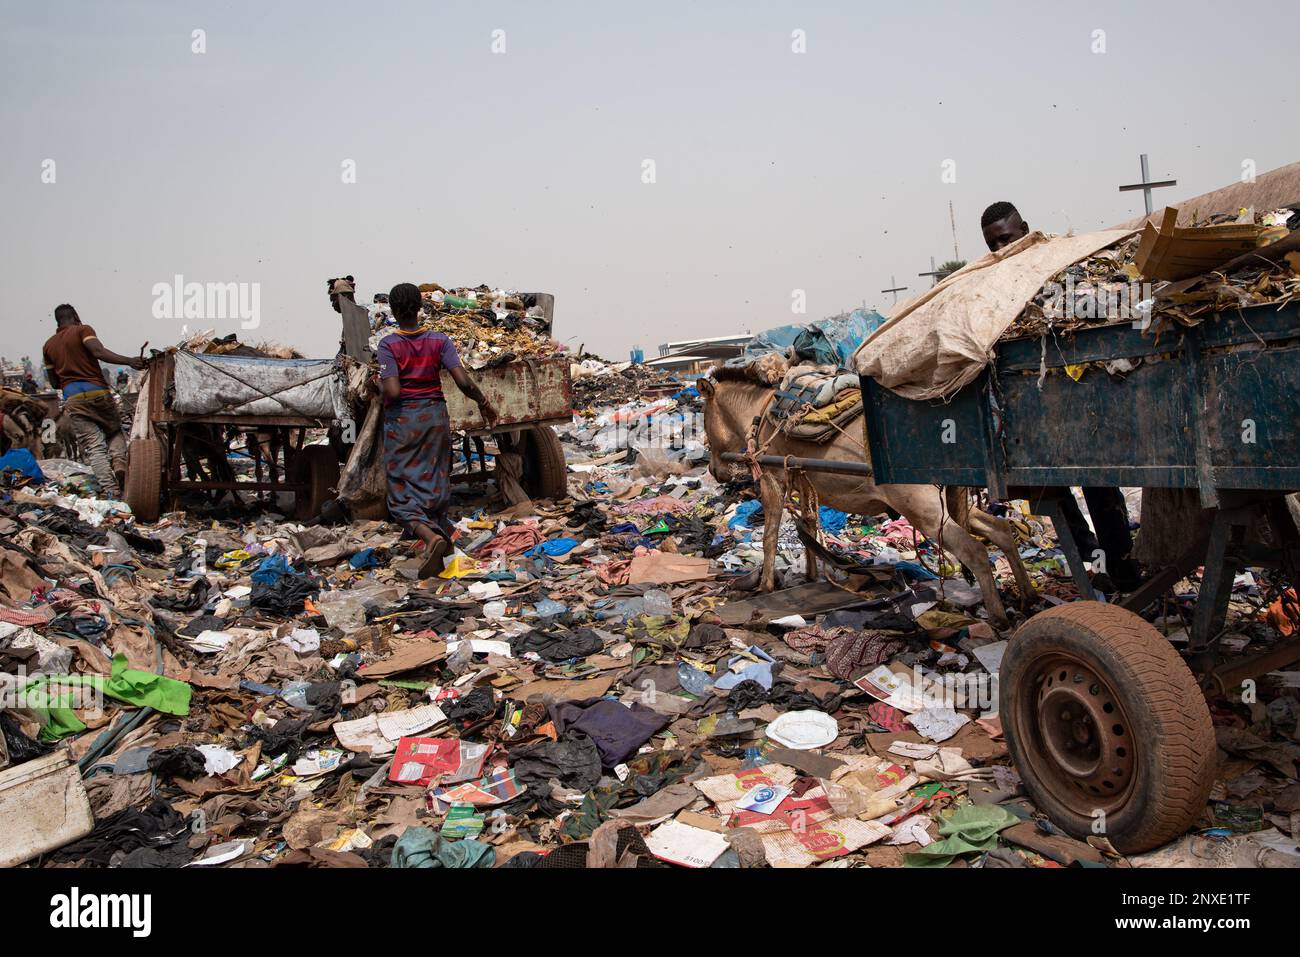 Nicolas Remene / Le Pictorium - Bamako - Mali: Urbanisierung, Entwicklung und Klimawandel - 19/2/2021 - Mali / Bamako District / Bamako - Hund Stockfoto